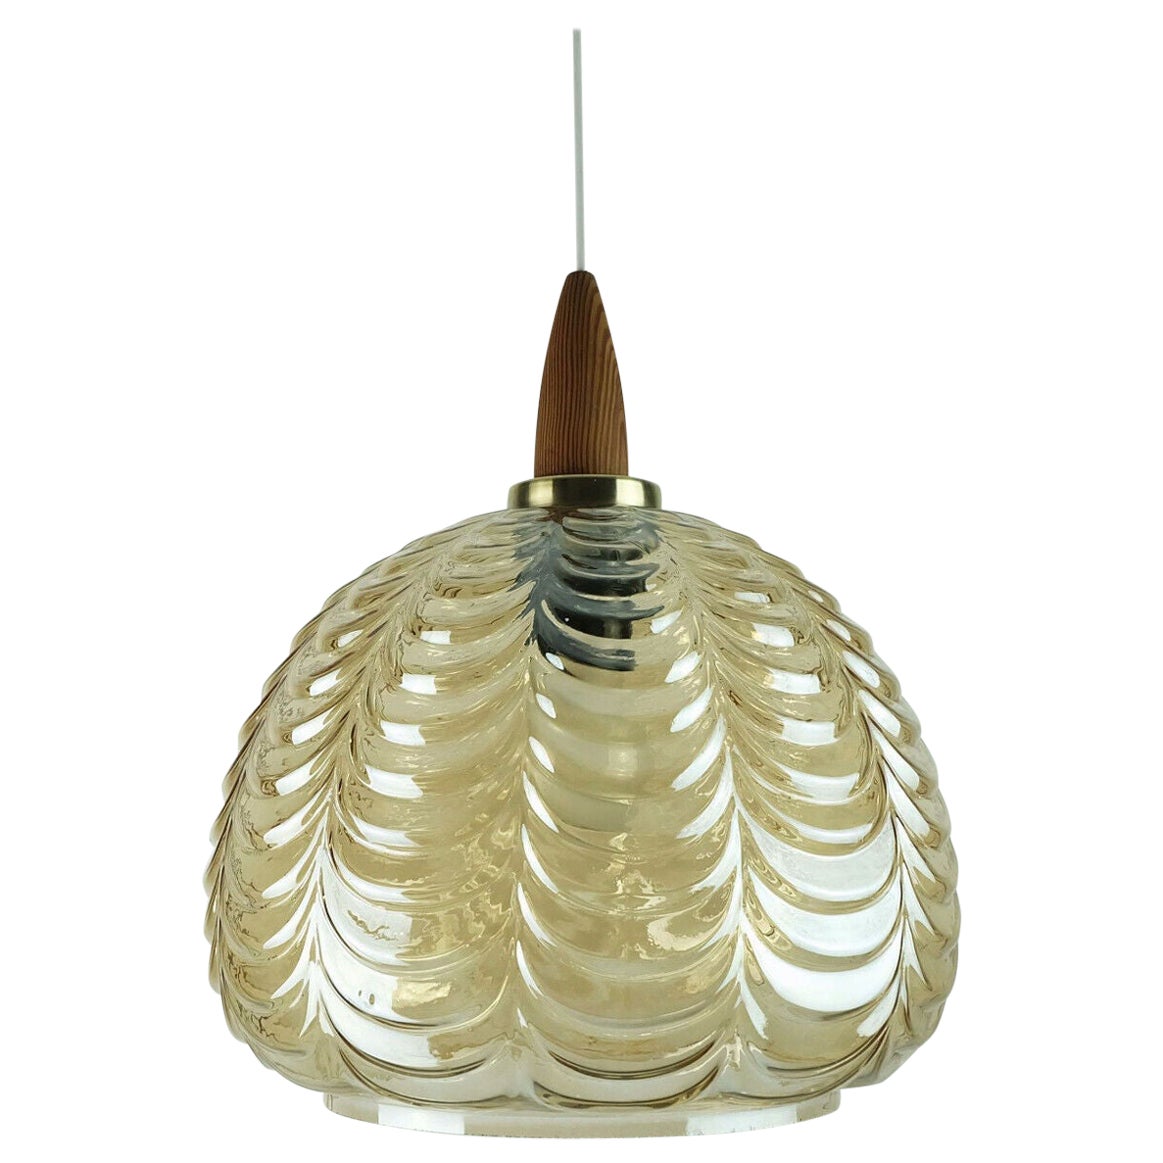 1960's mid century PENDANT LIGHT amber glass brass wood